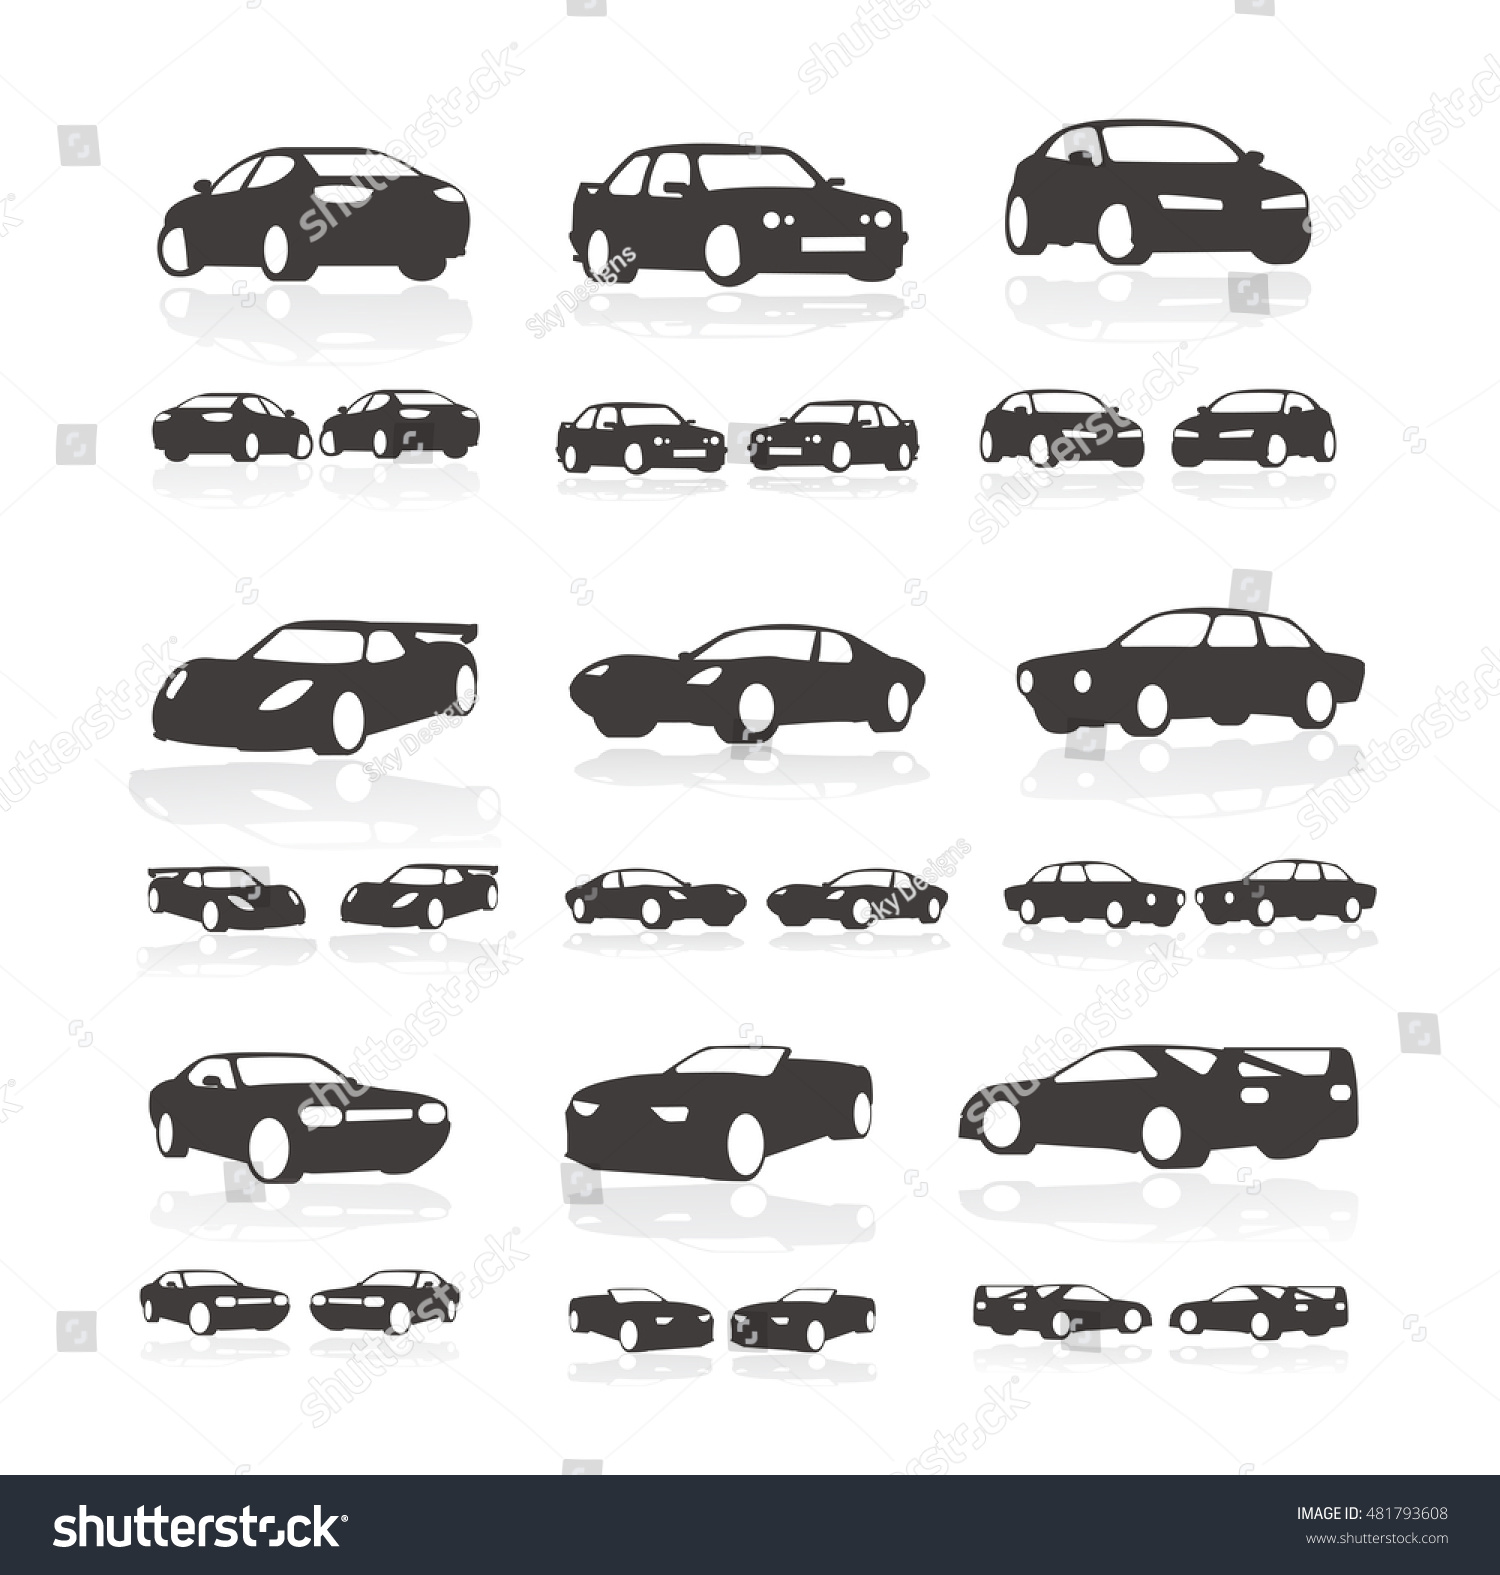 Set Of Cars Stock Vector Illustration 481793608 : Shutterstock